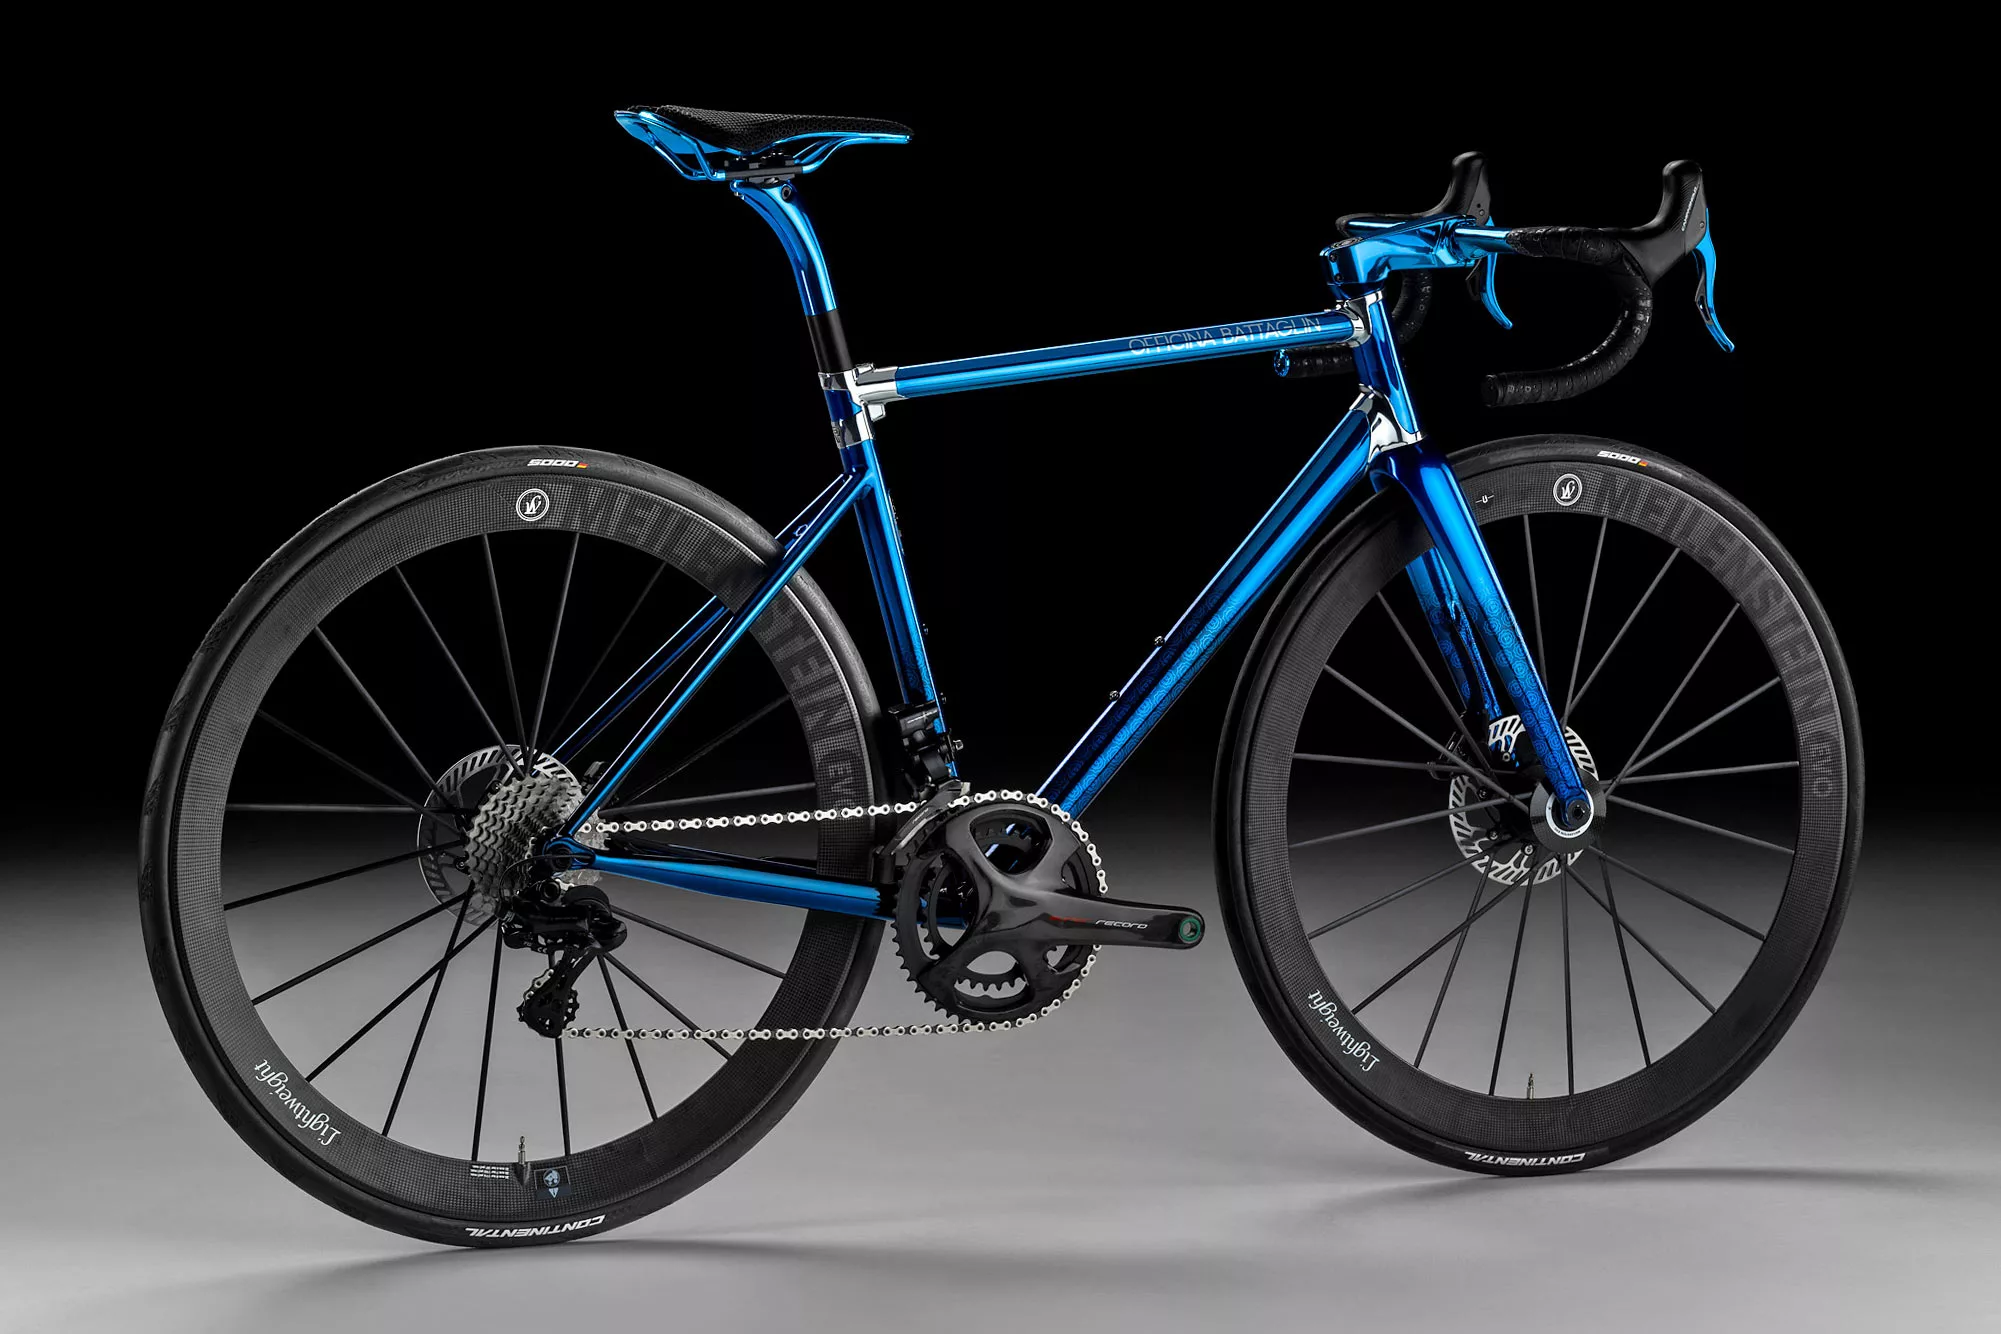 Battaglin Portofino R, custom-made-in -Italy modern integrated steel lugged road bike, cromovelato blue